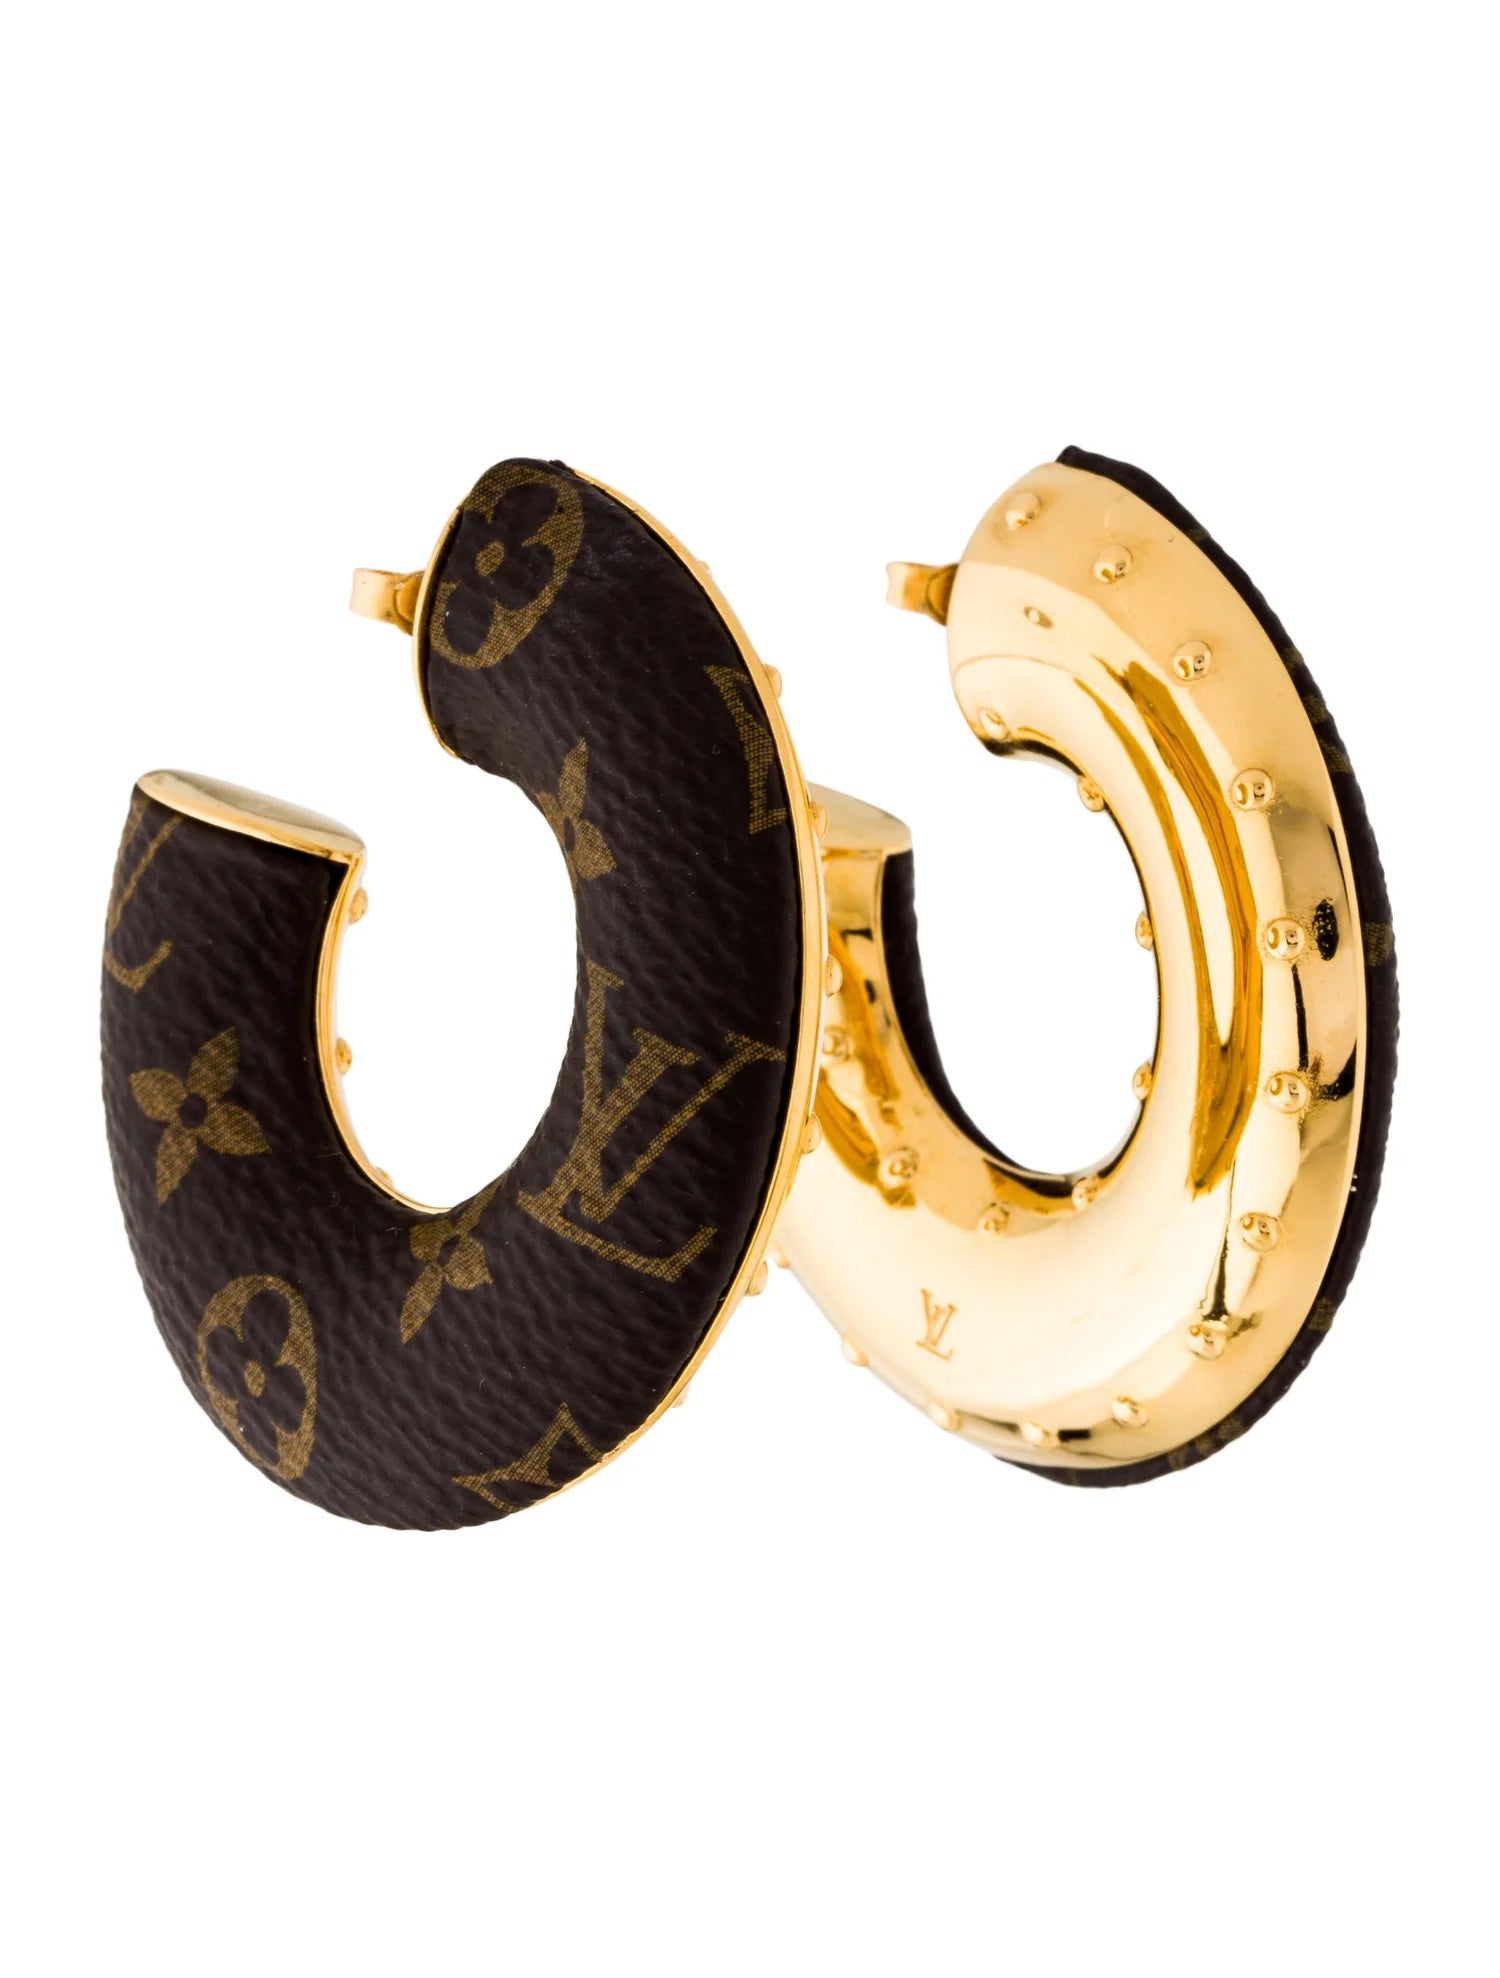 LOUIS VUITTON LV Logo Circle Hoop Earrings Gold Tone Authentic